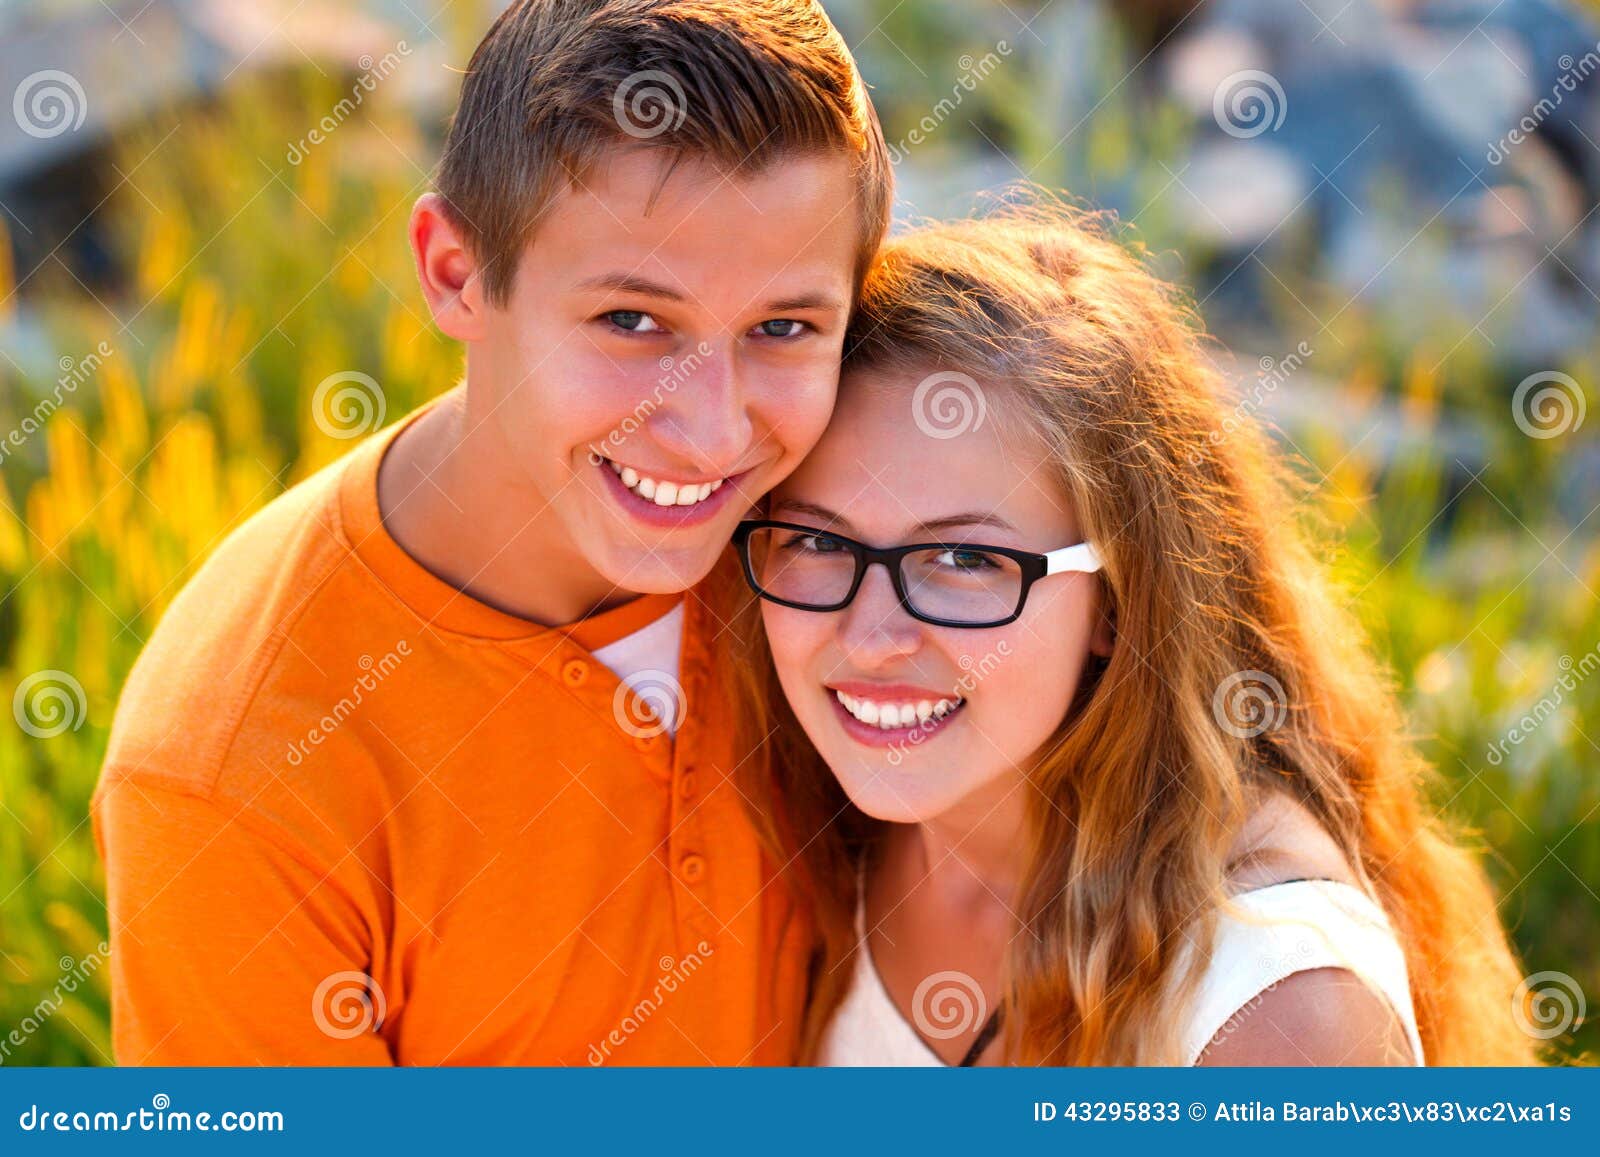 beautiful amateur teen lovers